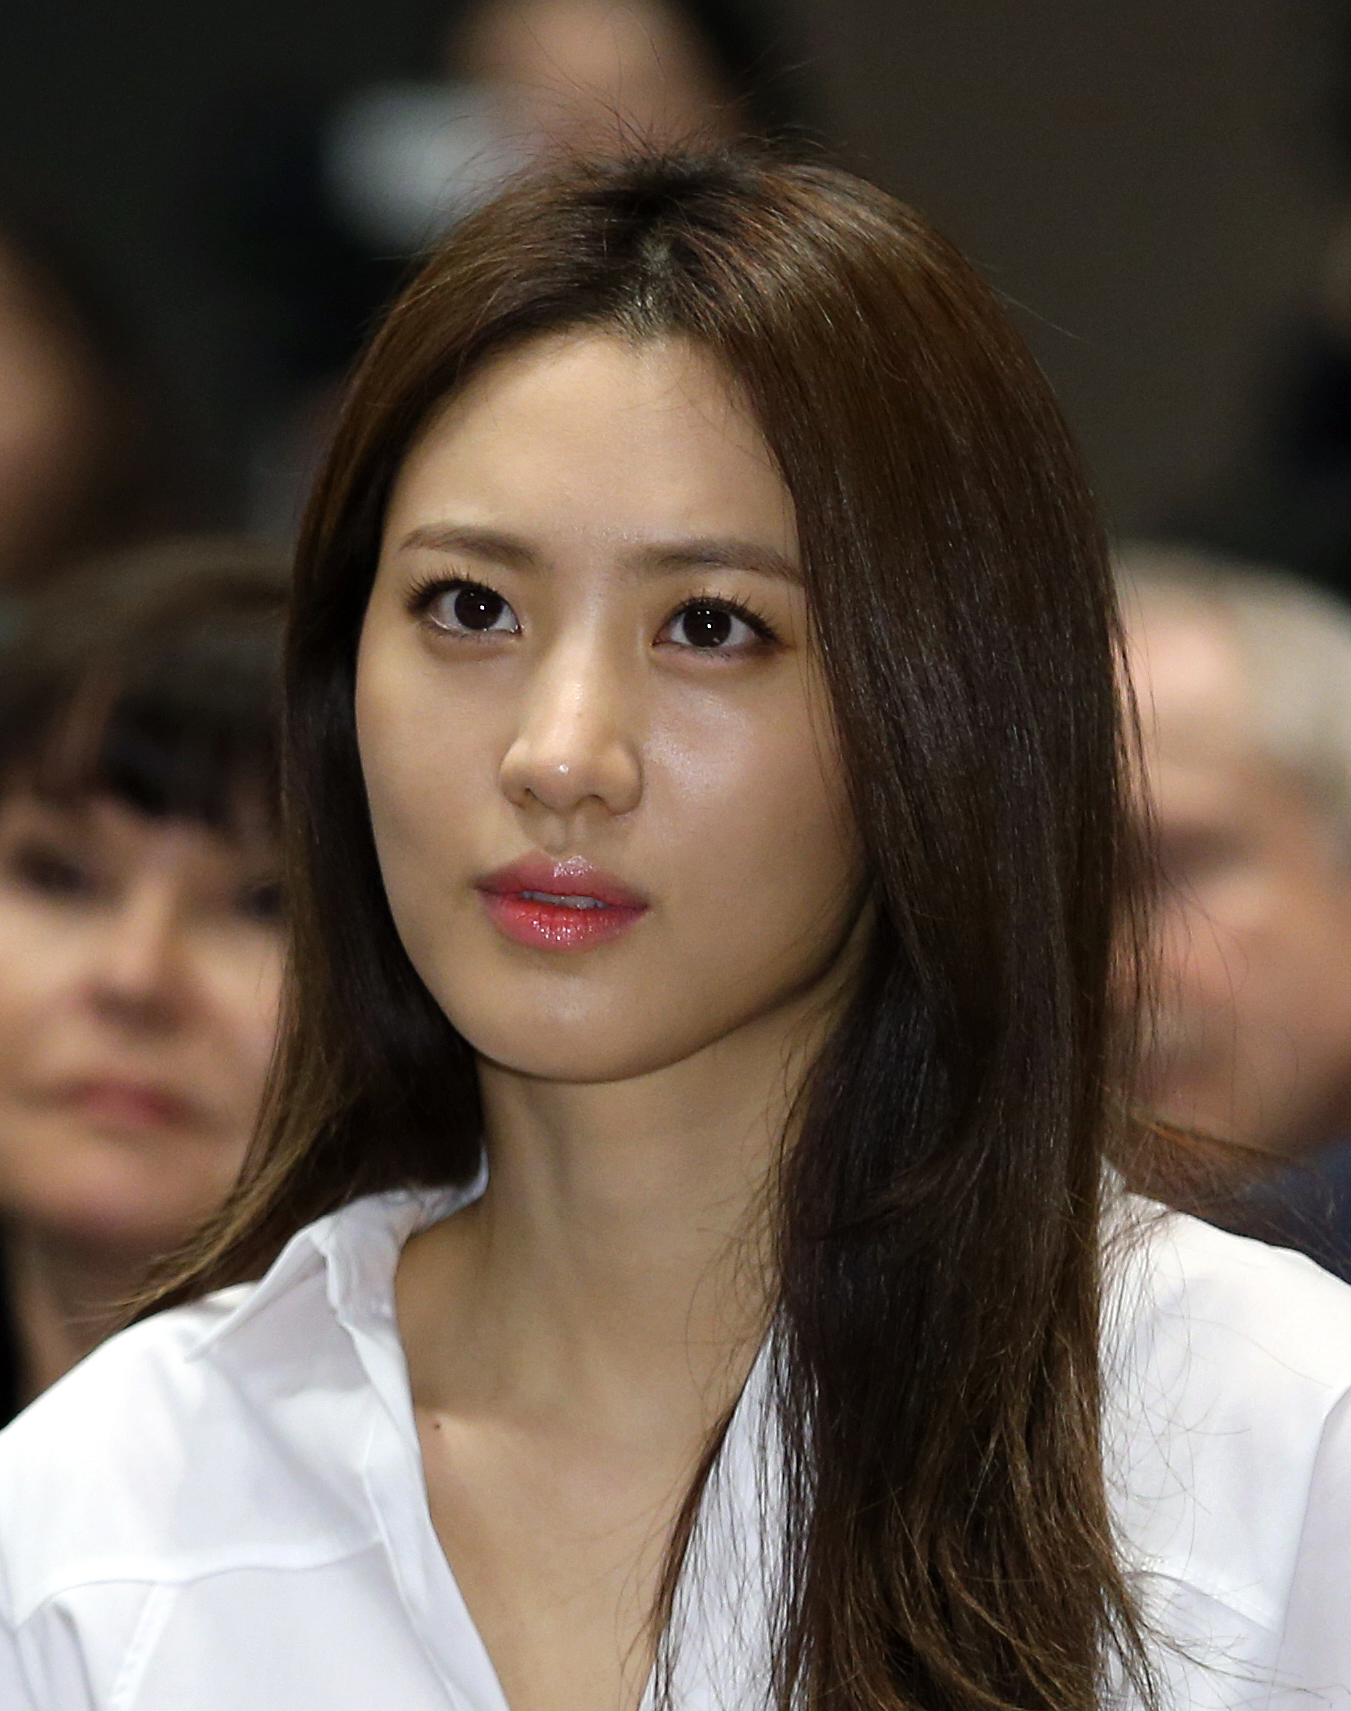 Kim_Soo-hyun_18_March_2014_%28cropped%29.png